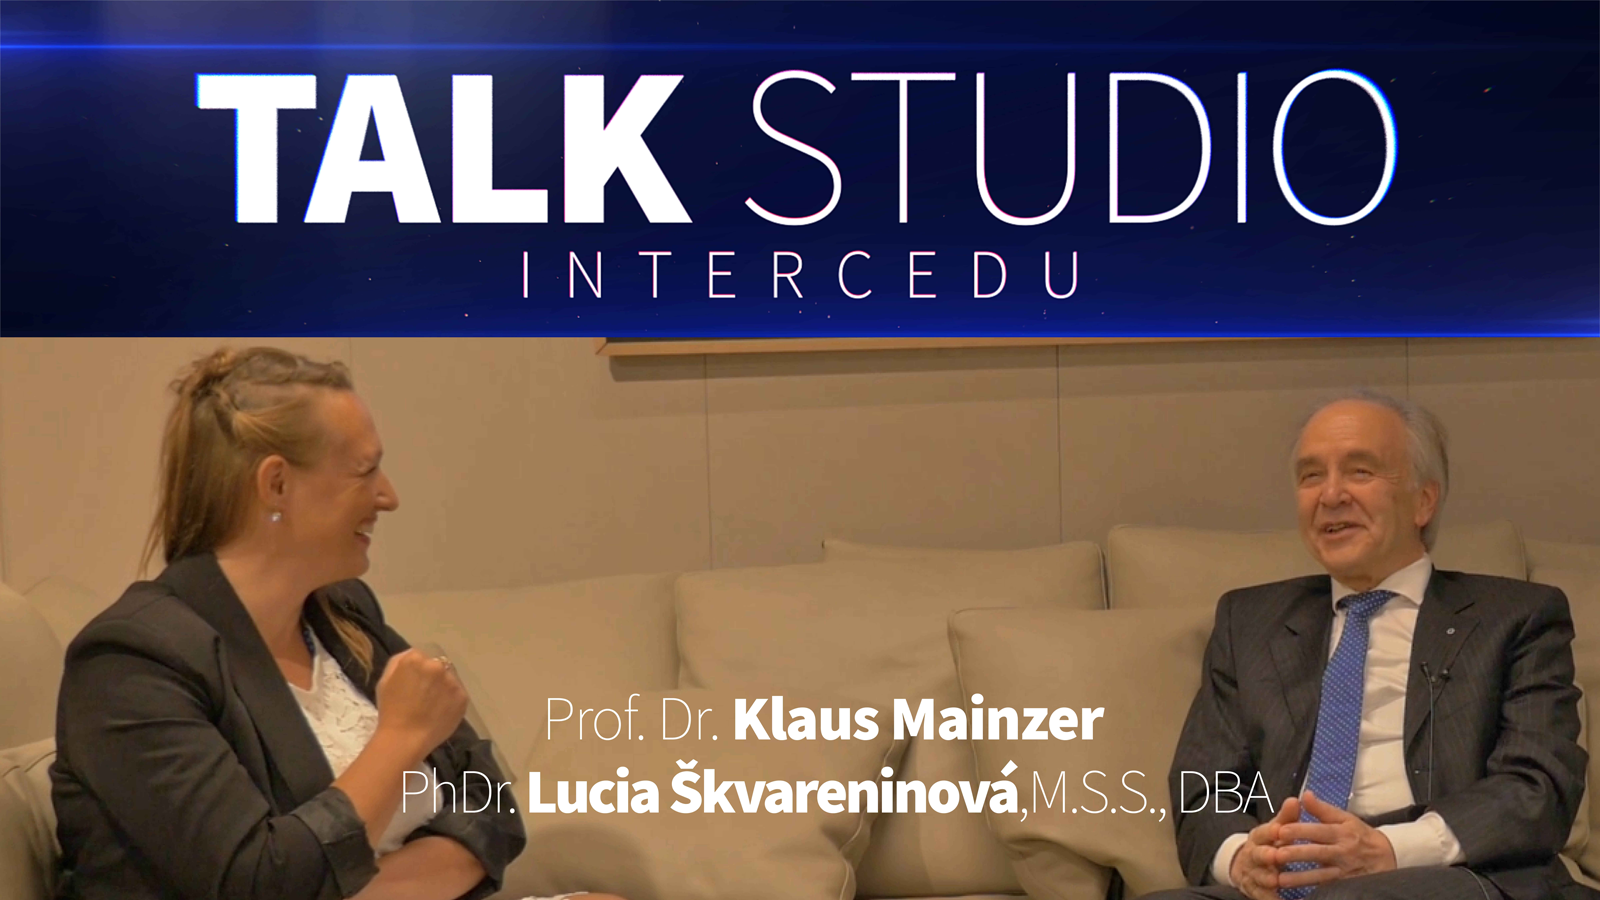 TALK STUDIO INTERCEDU: prof. Dr. Klaus Mainzer and PhDr. Lucia Škvareninová